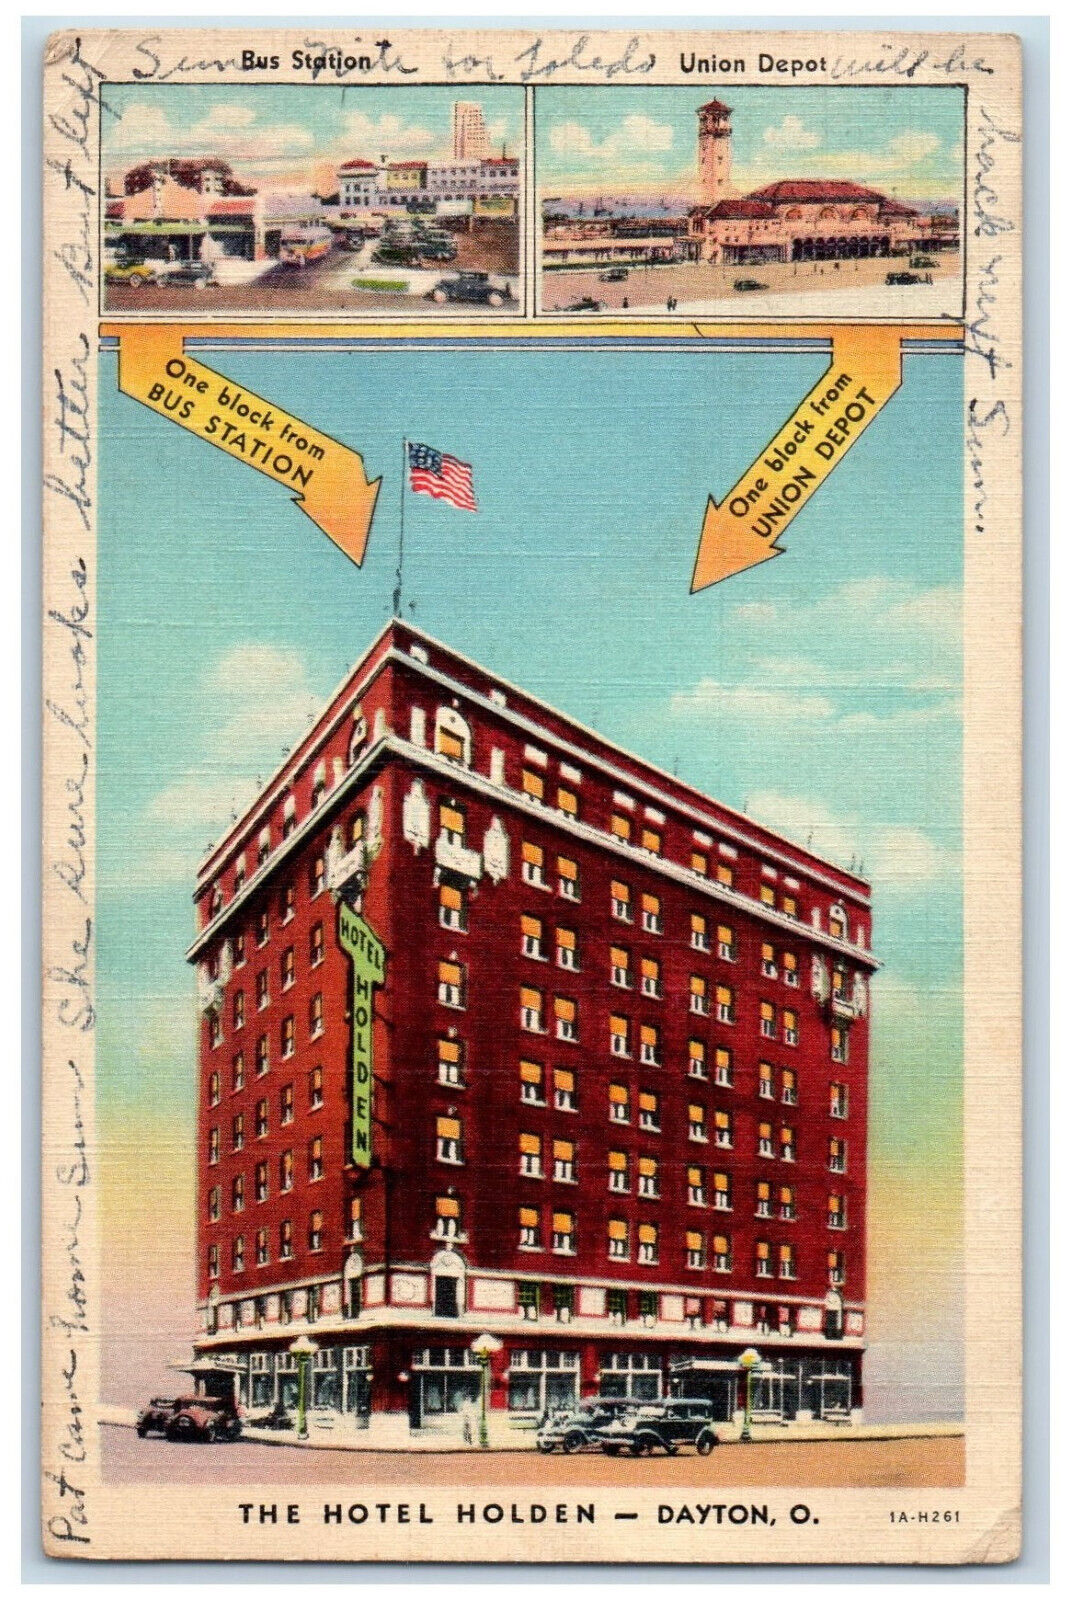 1940 The Hotel Holden Bus Station Union Depot Dayton Ohio OH Postcard